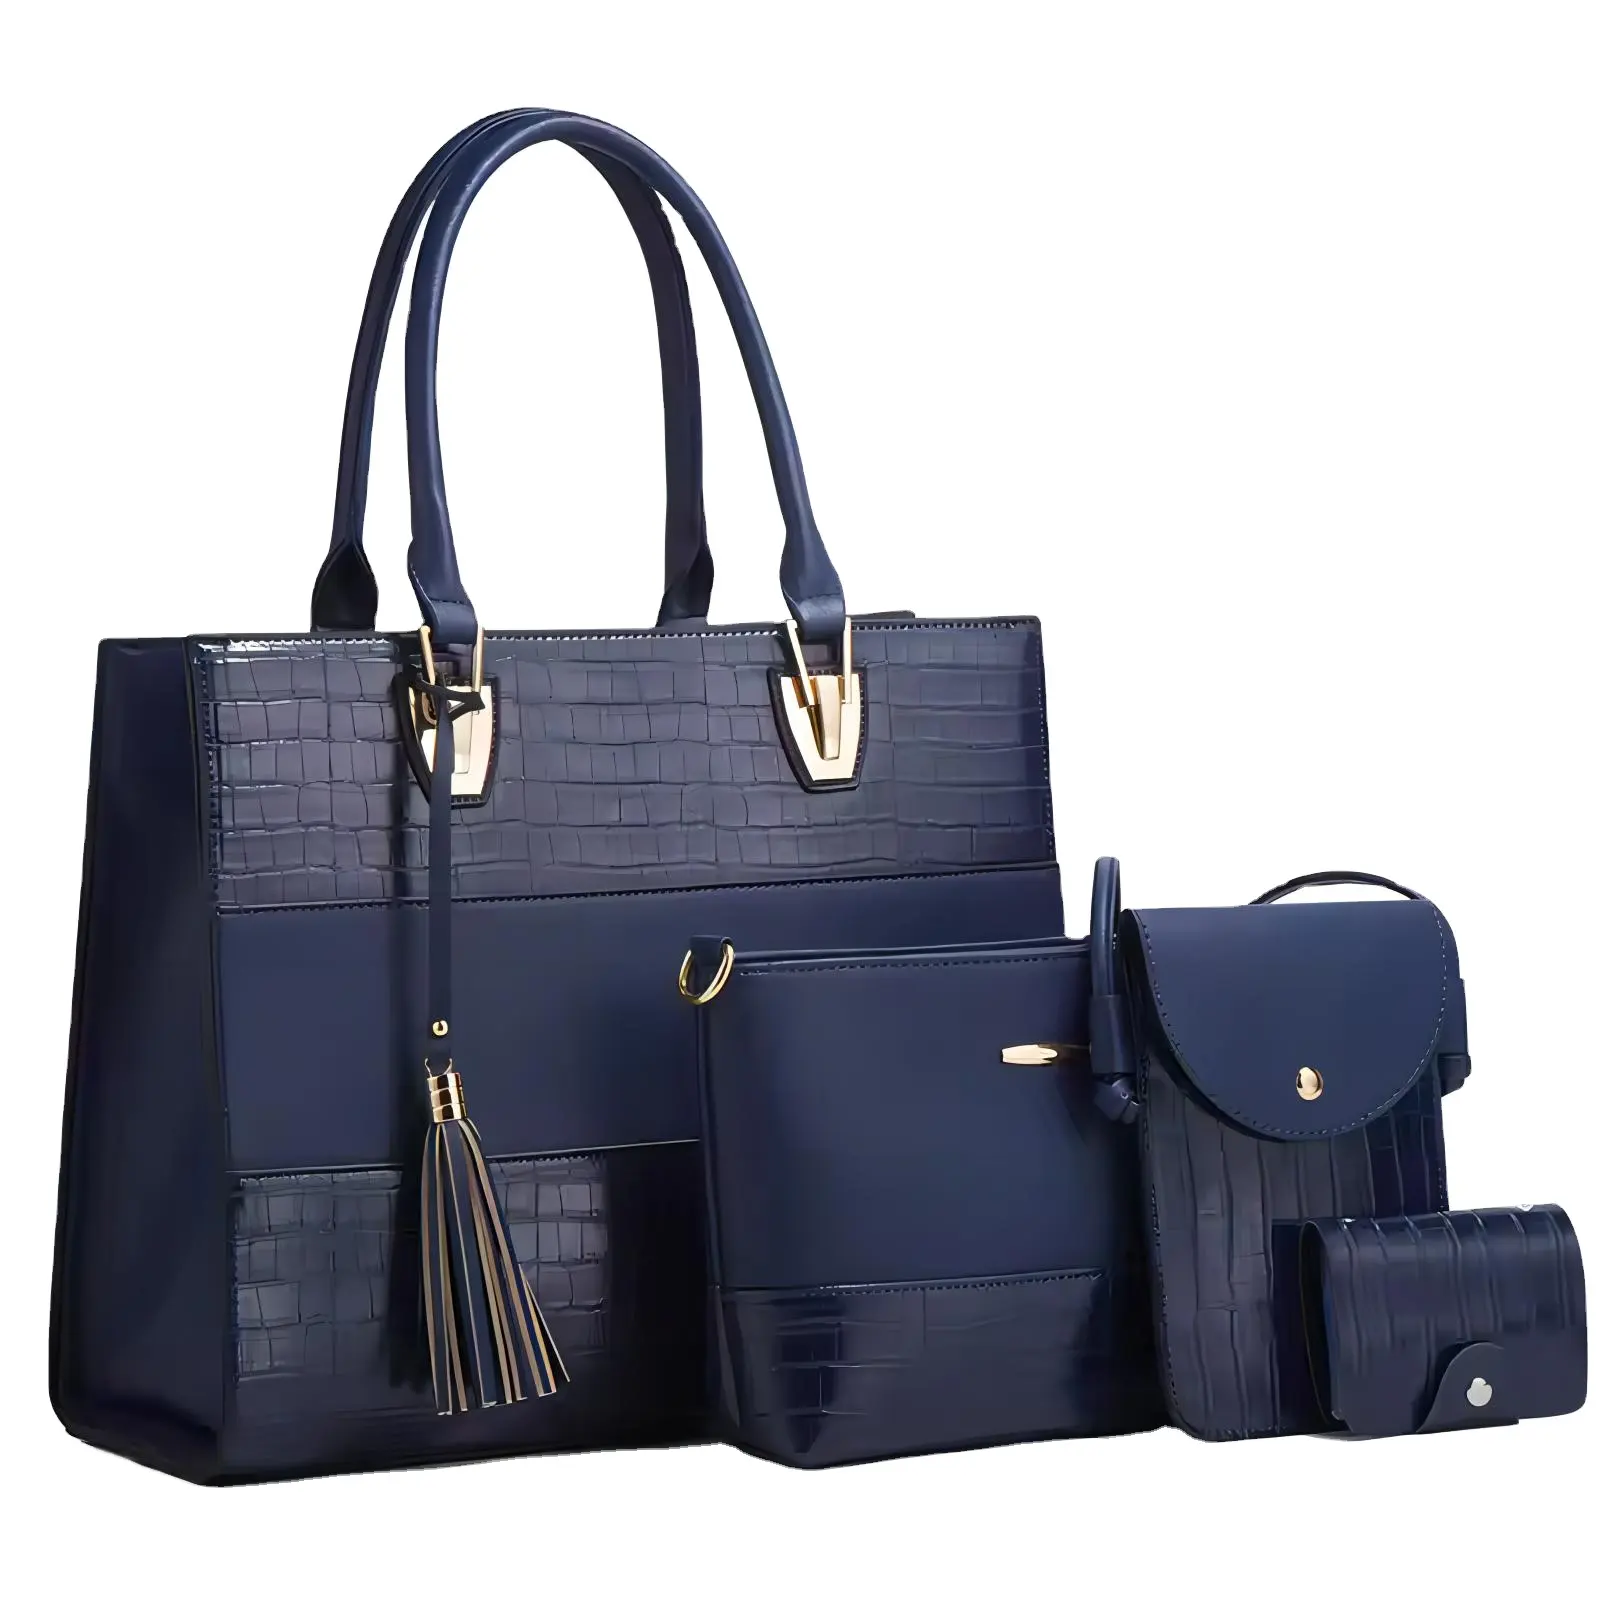 Westal 4pcs Set Purses and Handbags Set Women Handbag Women Shoulder Bags Tote Satchel Bag Card Holders Set